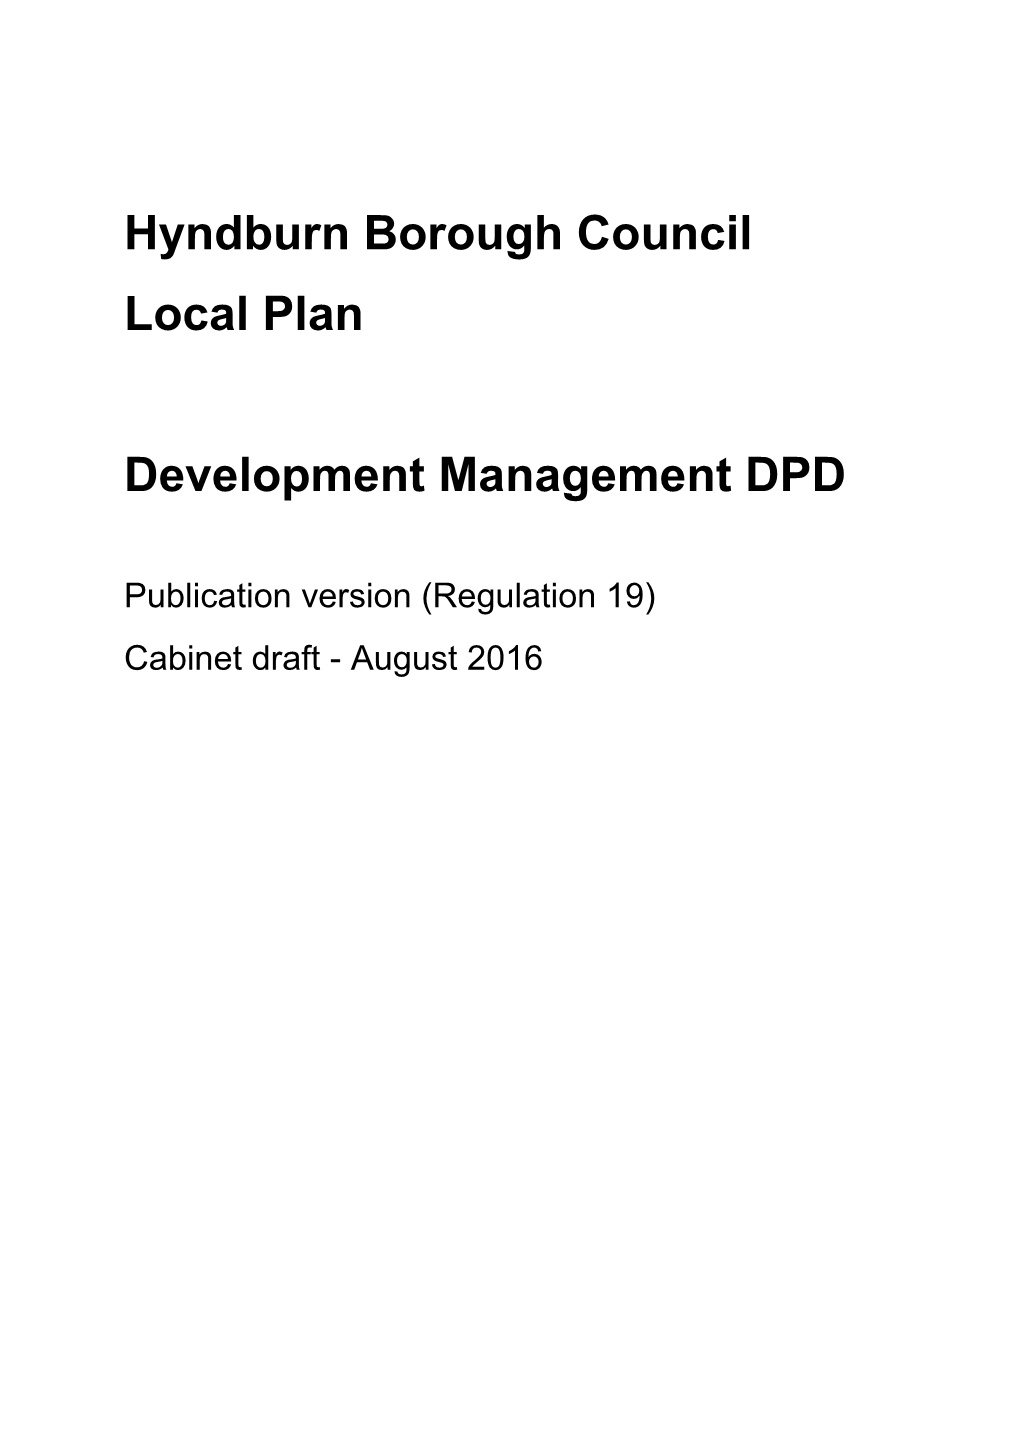 Hyndburn Borough Council Local Plan Development Management